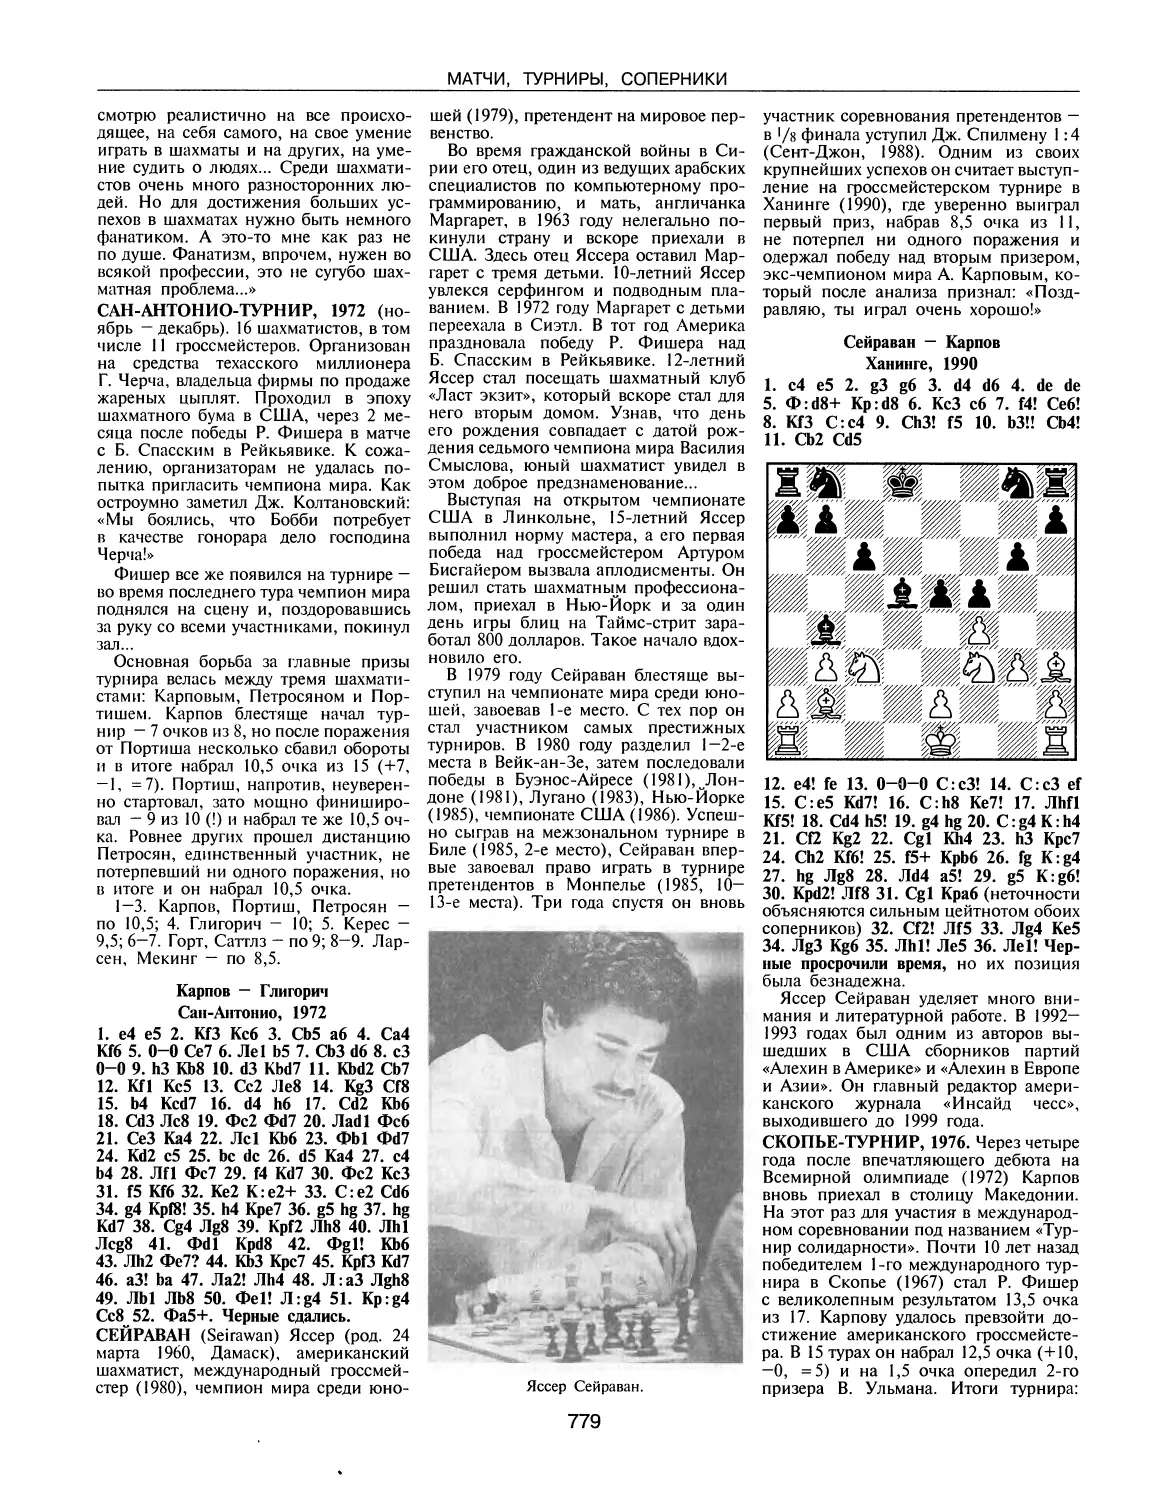 Сан-Антонио-турнир, 1972
Сейраван Я.
Скопье-турнир, 1976